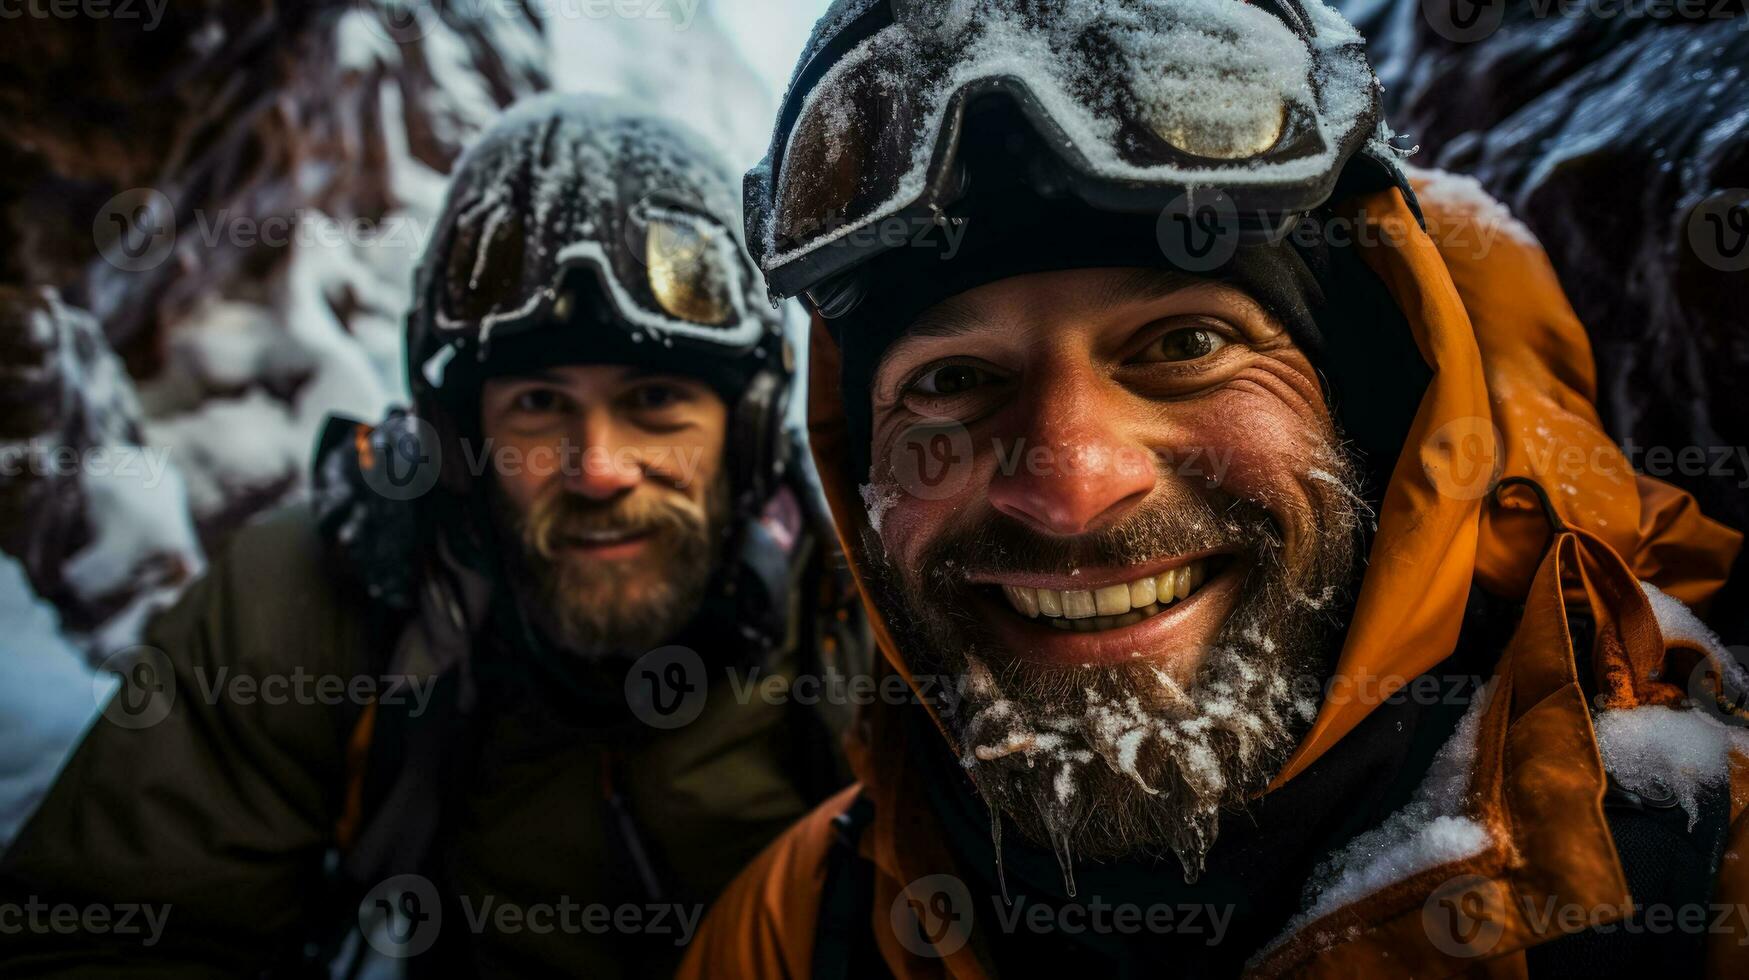 entusiasmado espeleólogos explorando escondido neve cavernas dentro frio Alto altitude arredores foto